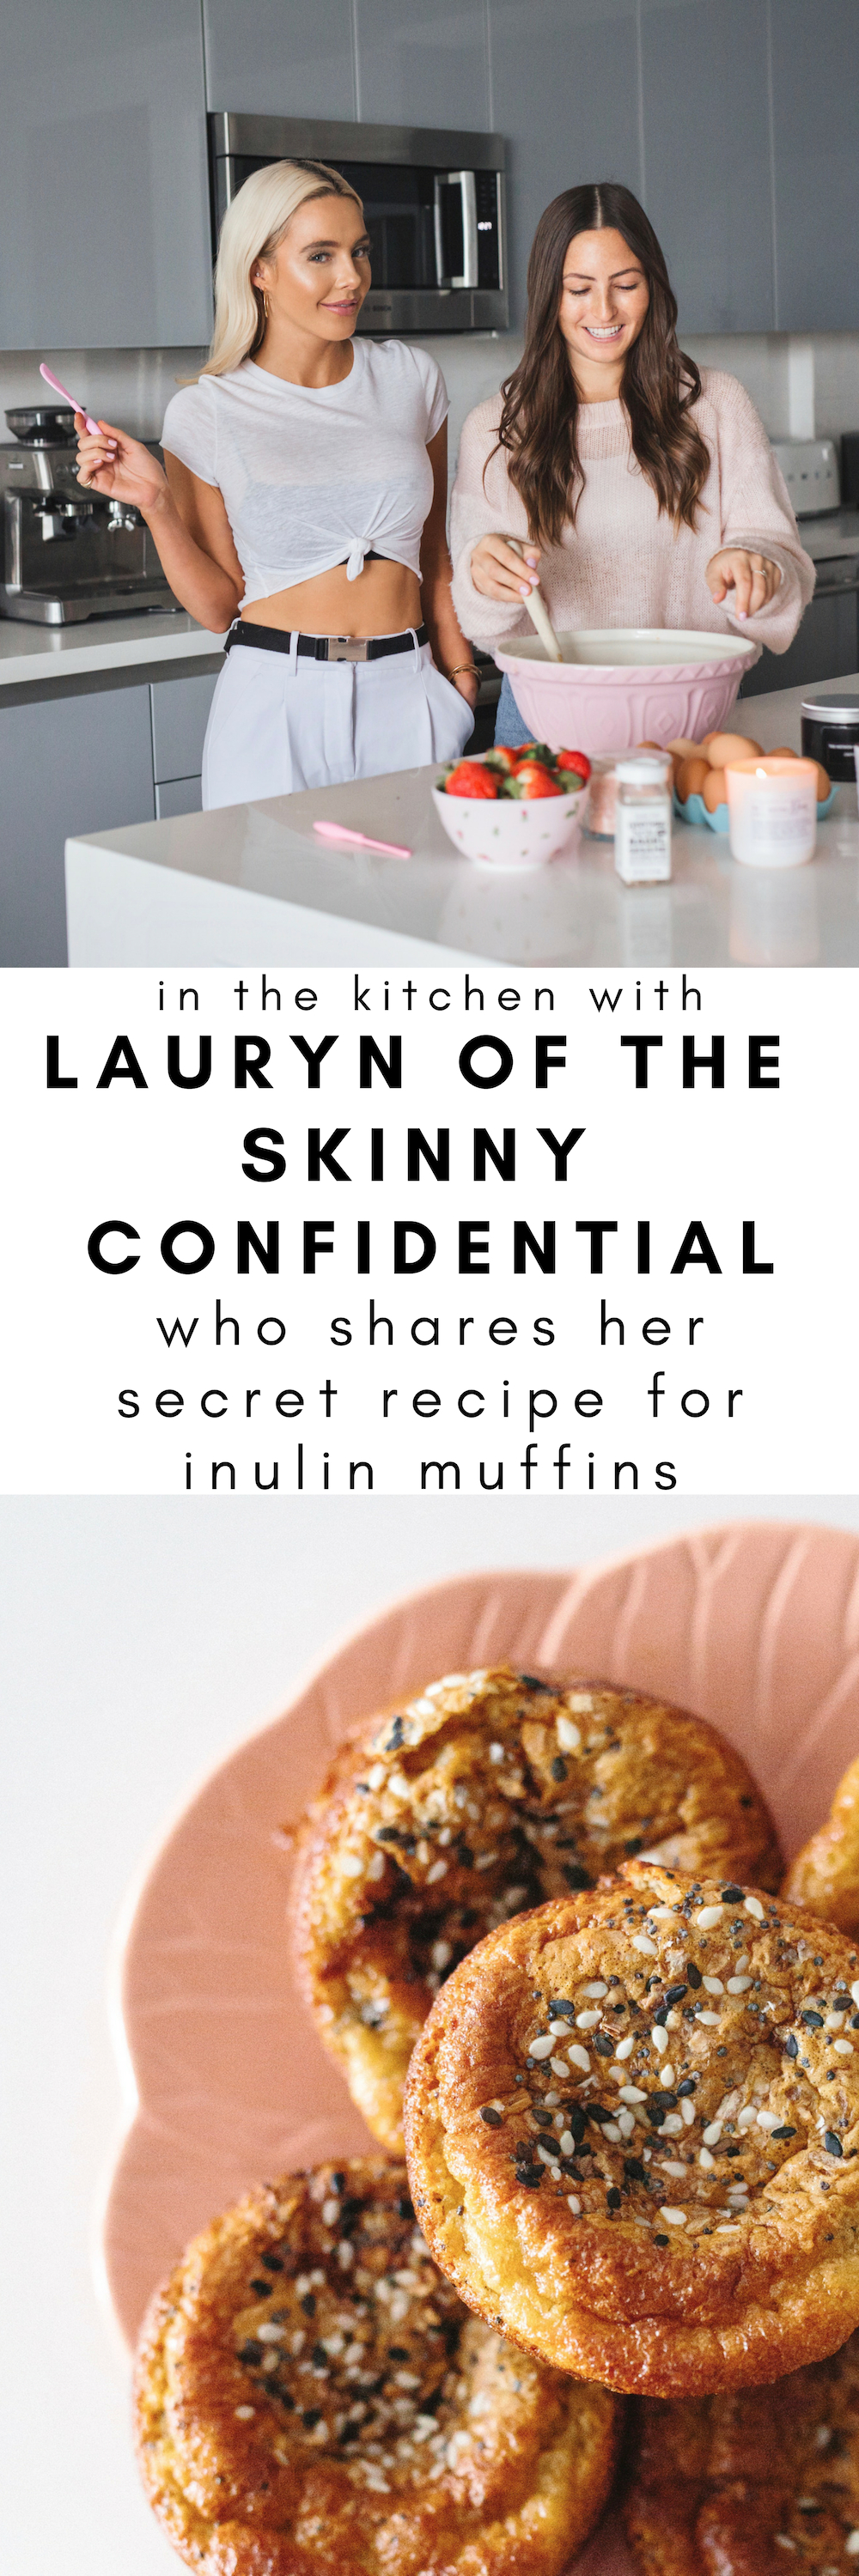 The Skinny Confidential inulin muffin recipe